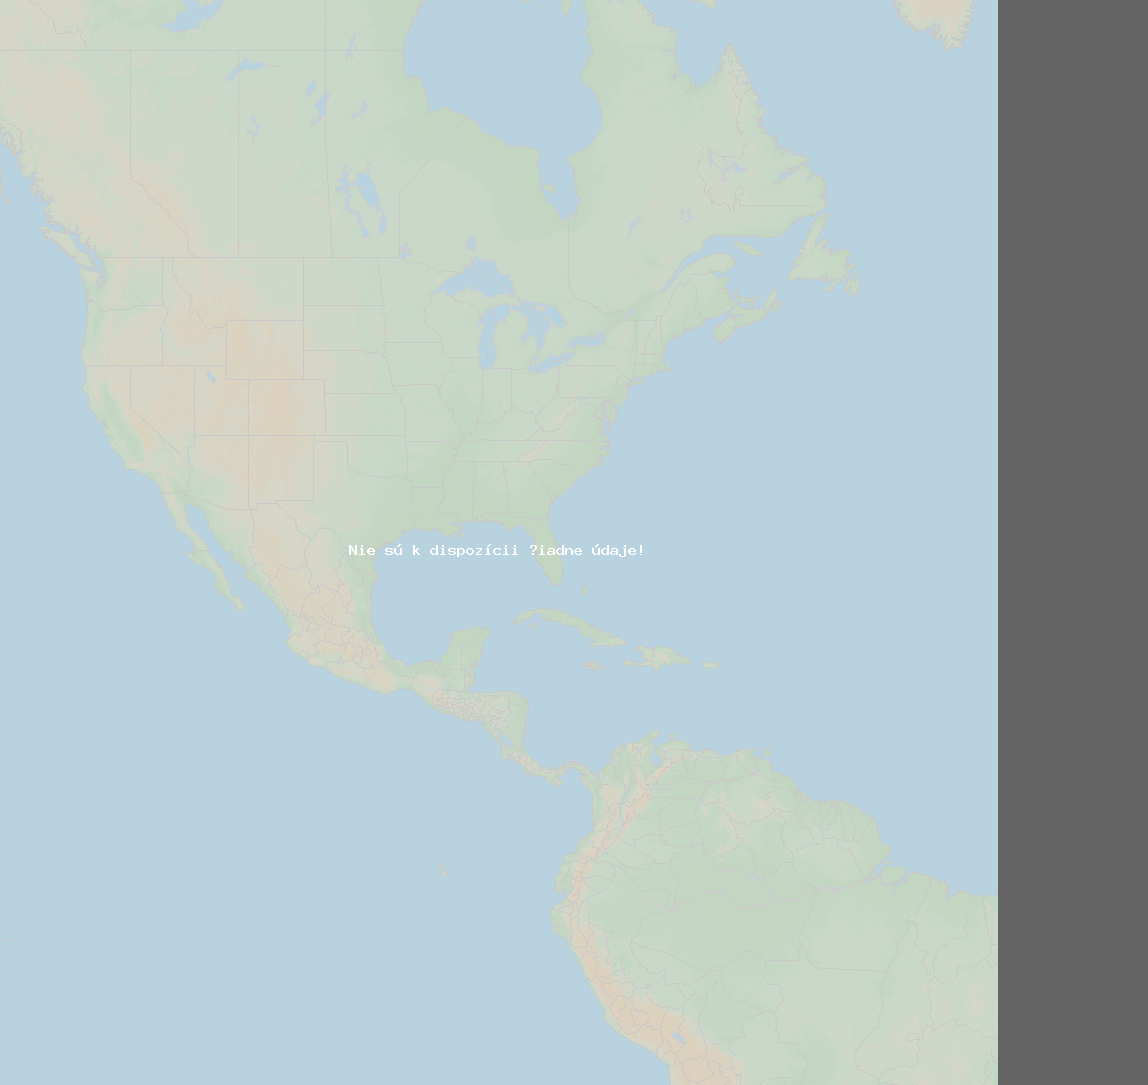 Pomer bleskov (Stanica Haleakala) North America 2020 Júl